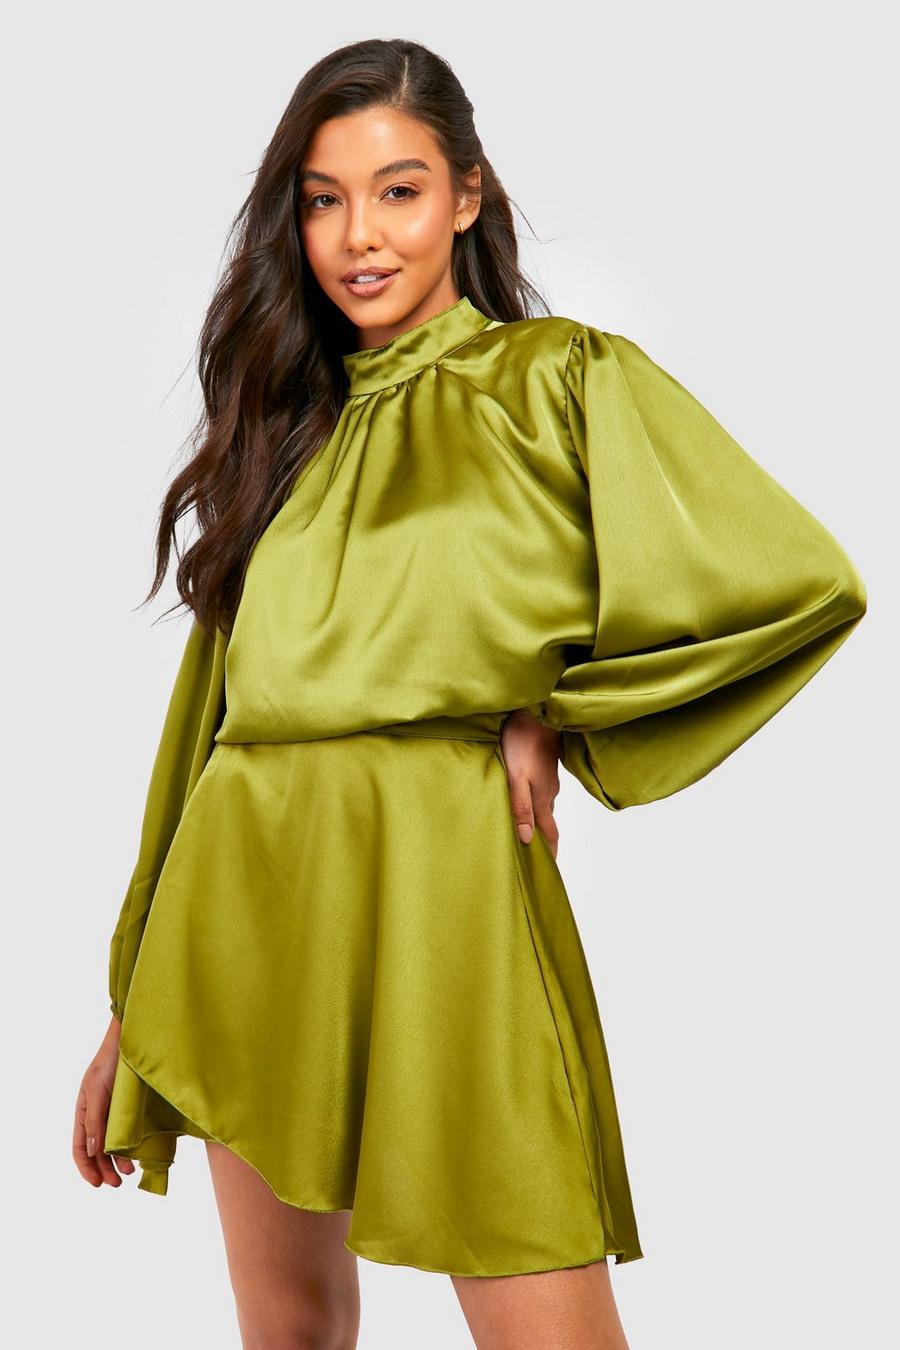 Chartreuse yellow Satin High Neck Volume Sleeve Crop & Skirt